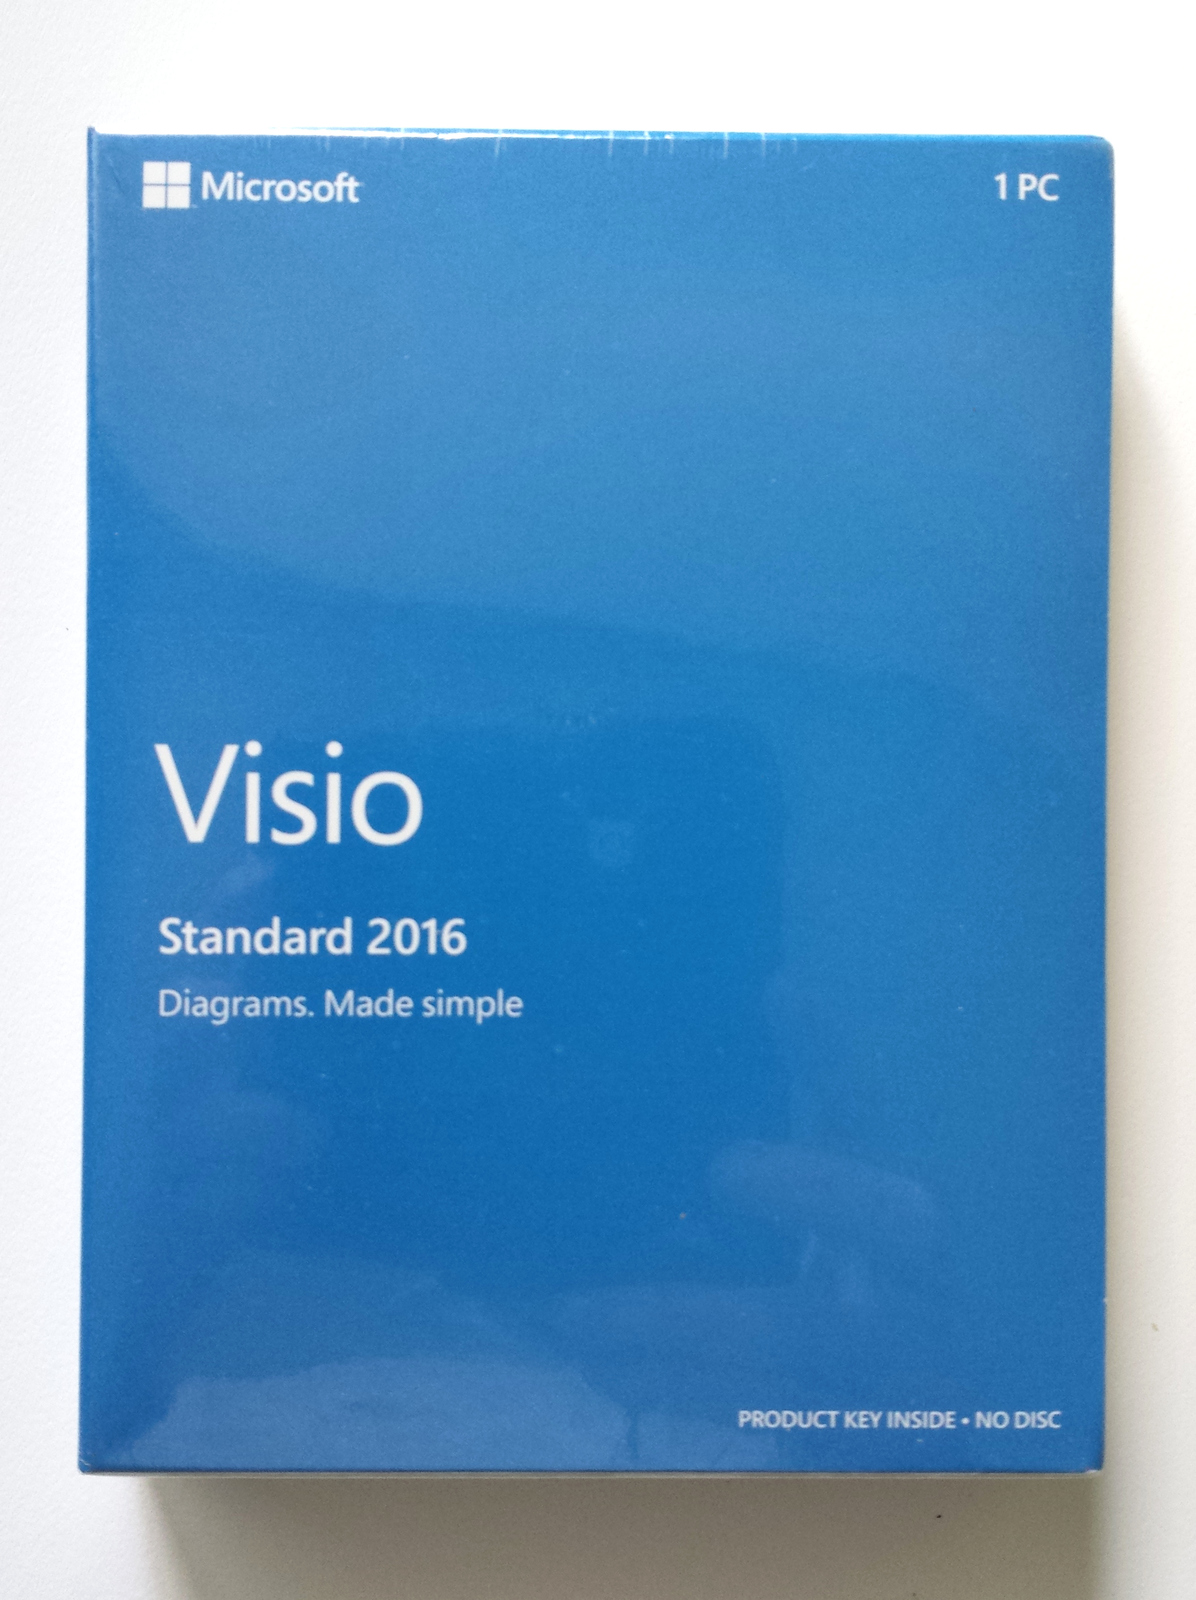 Microsoft Visio Standard 2016 - 1 PC - Sealed Retail Box - $120.00